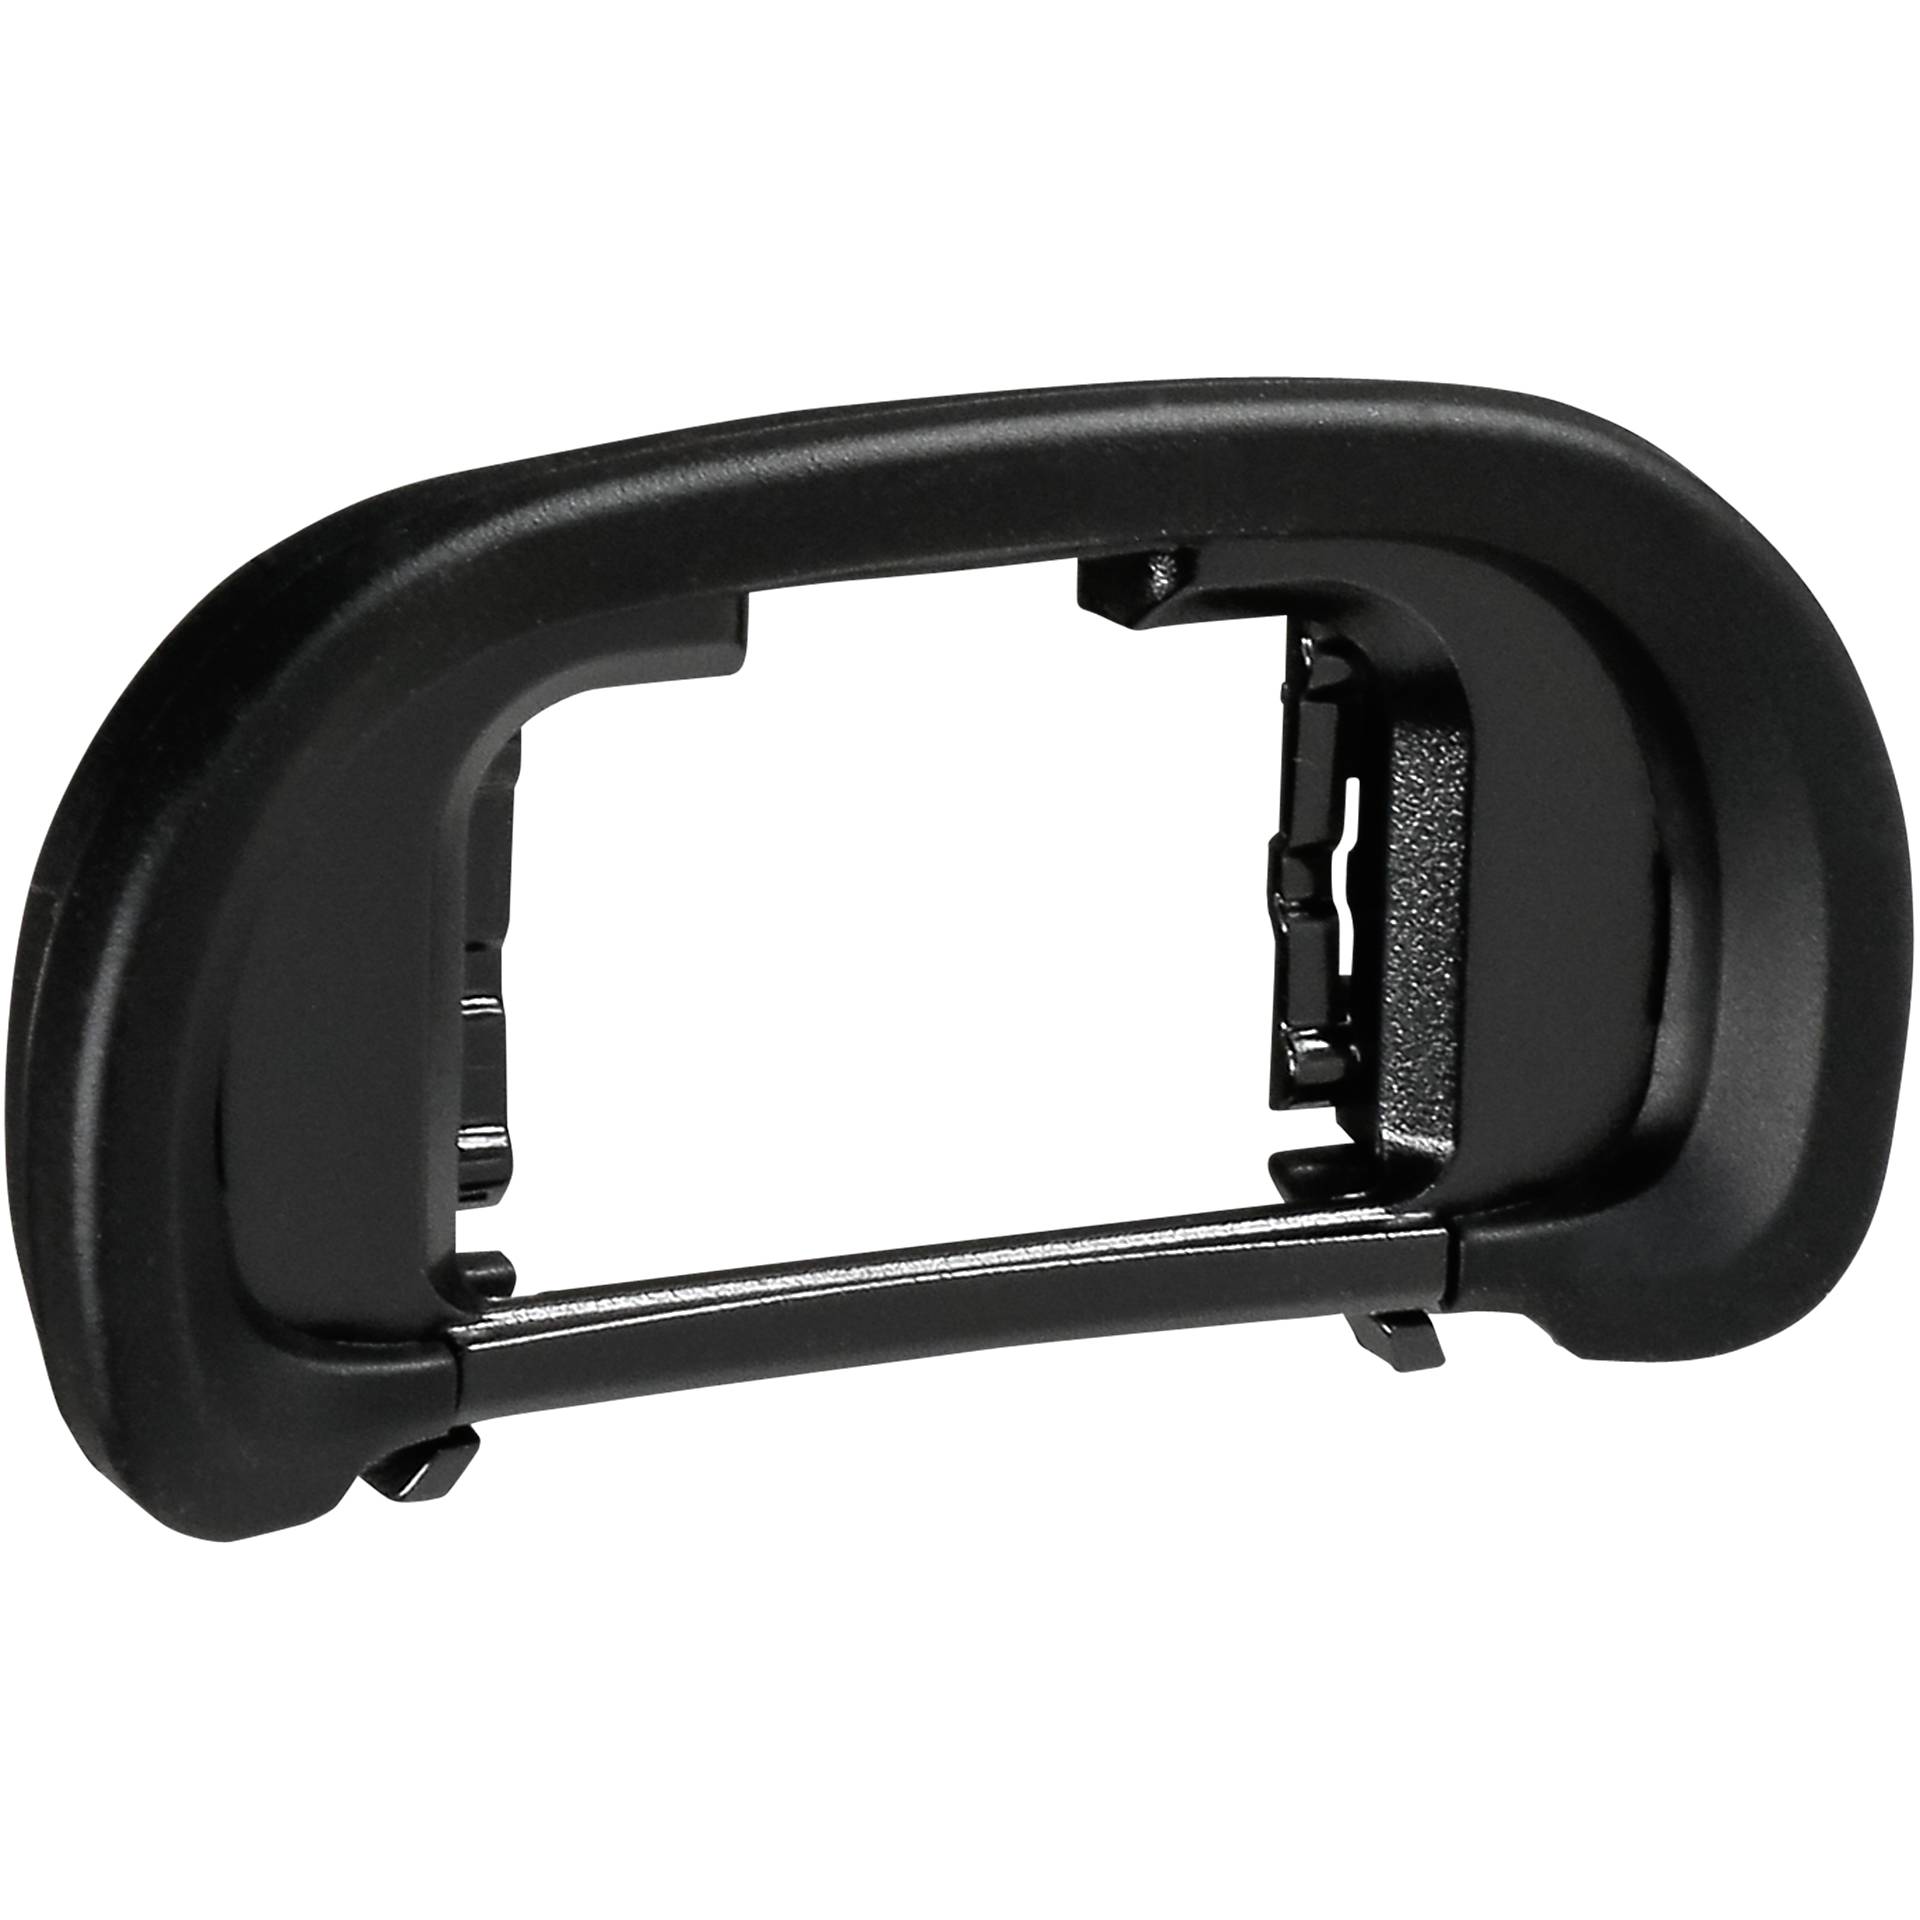 Sony FDA-EP18 eyepiece accessory Eyecup Black